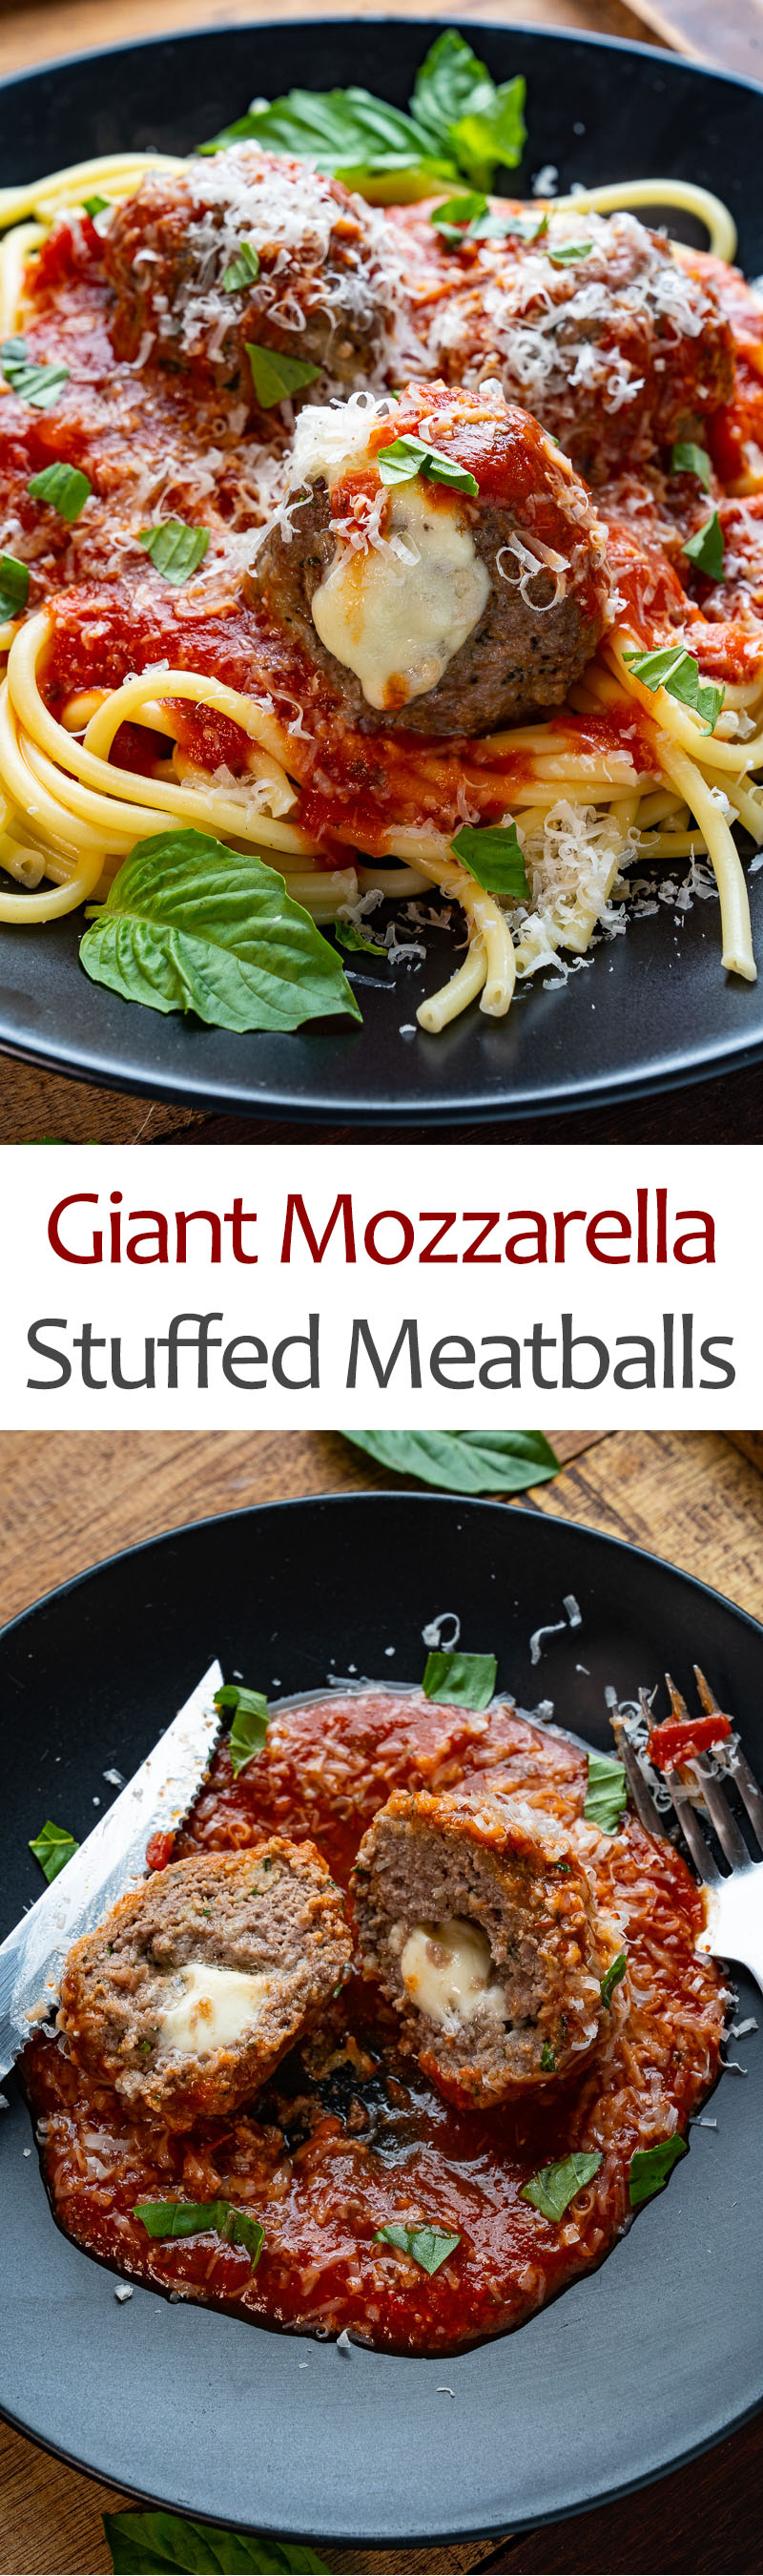 Giant Mozzarella Stuffed Meatballs